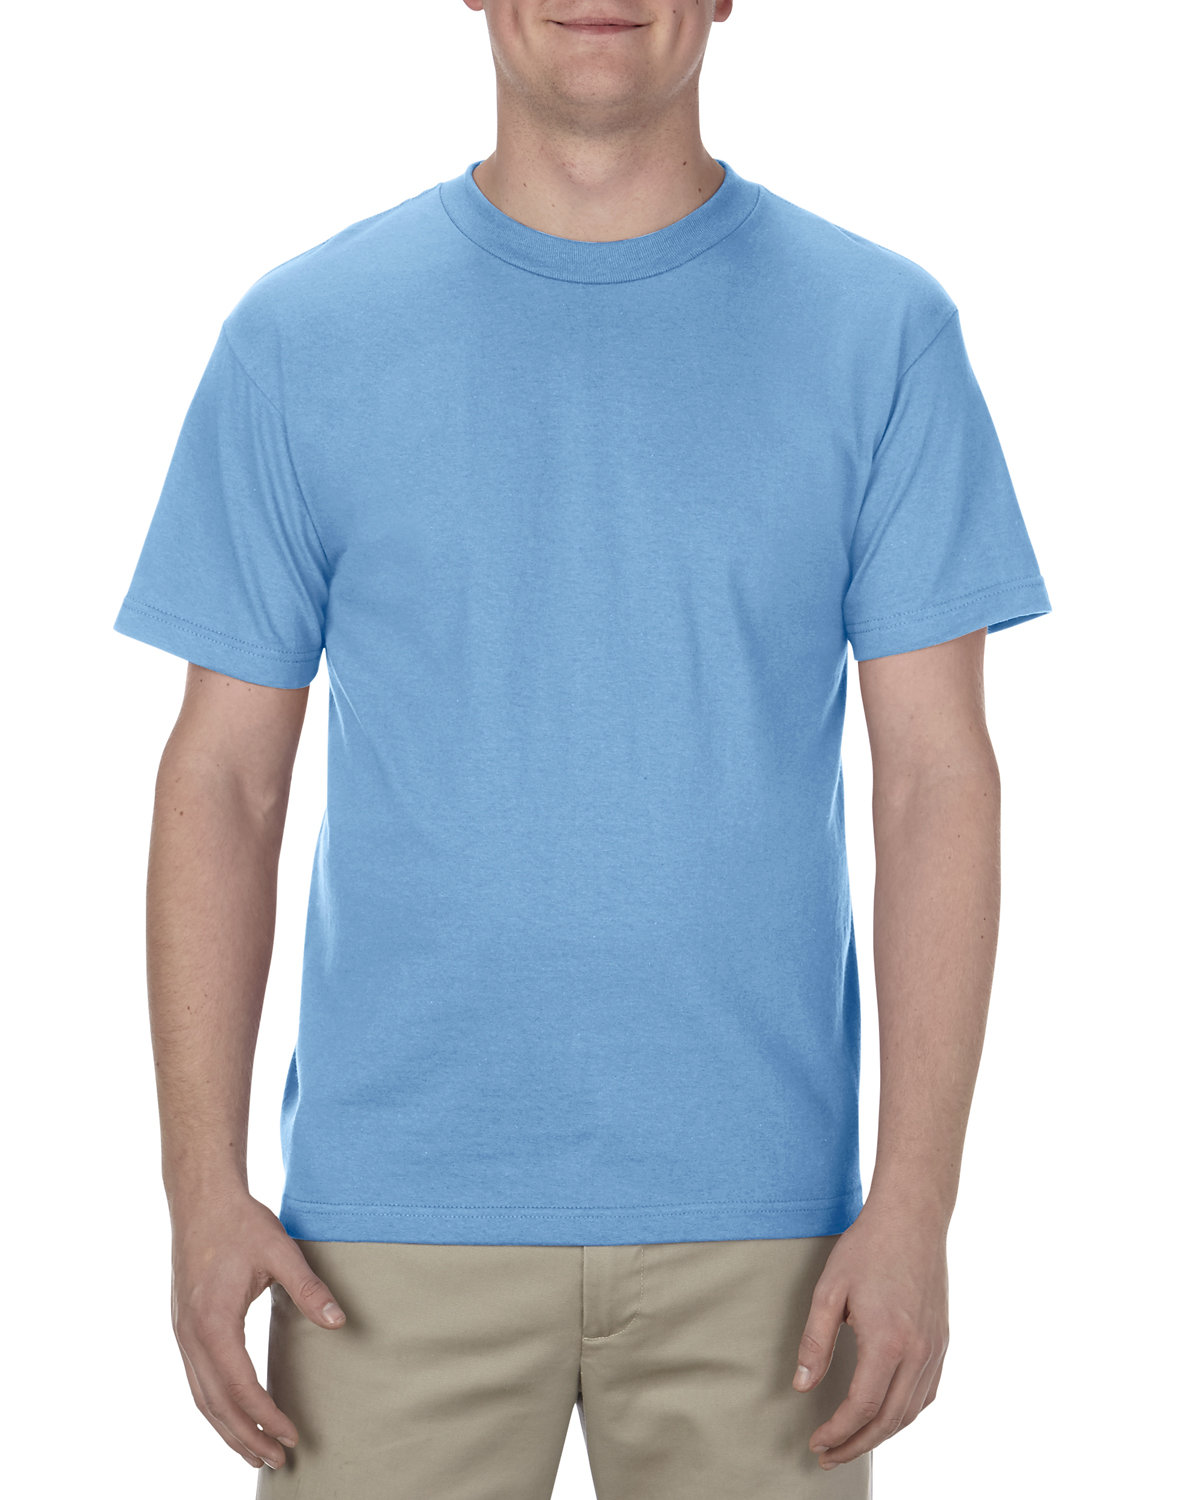 American Apparel Adult 6.0 oz., 100% Cotton T-Shirt CAROLINA BLUE 